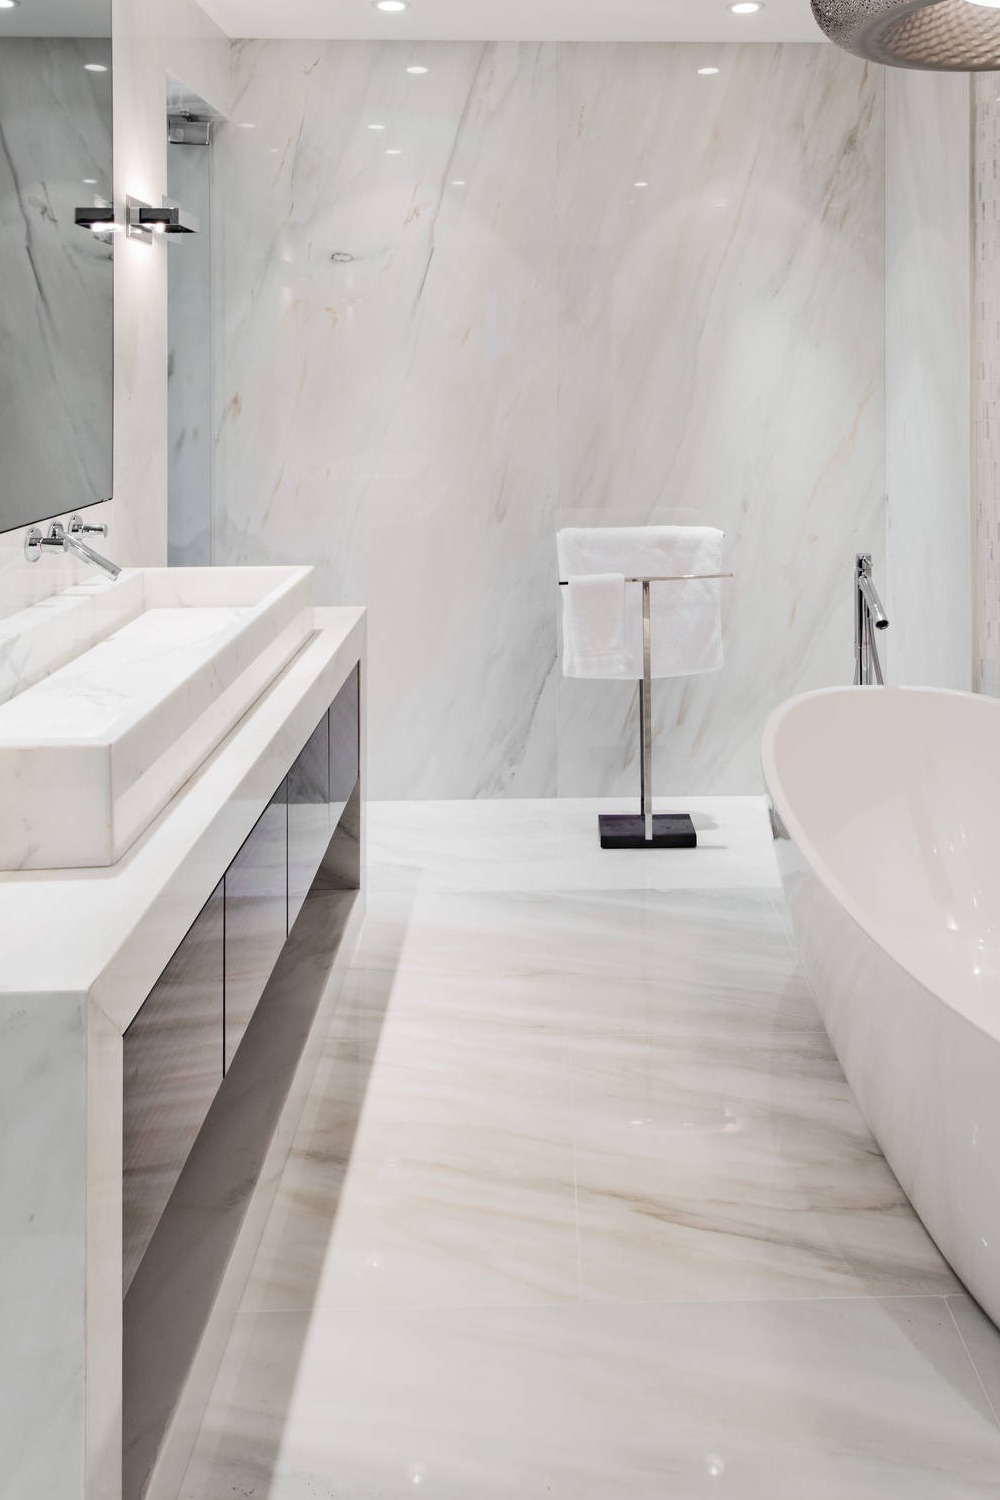 White Marble Countertops Flat Panel Brown Cabinets Floor Tiles Free Standing Towel Rack Bathtub